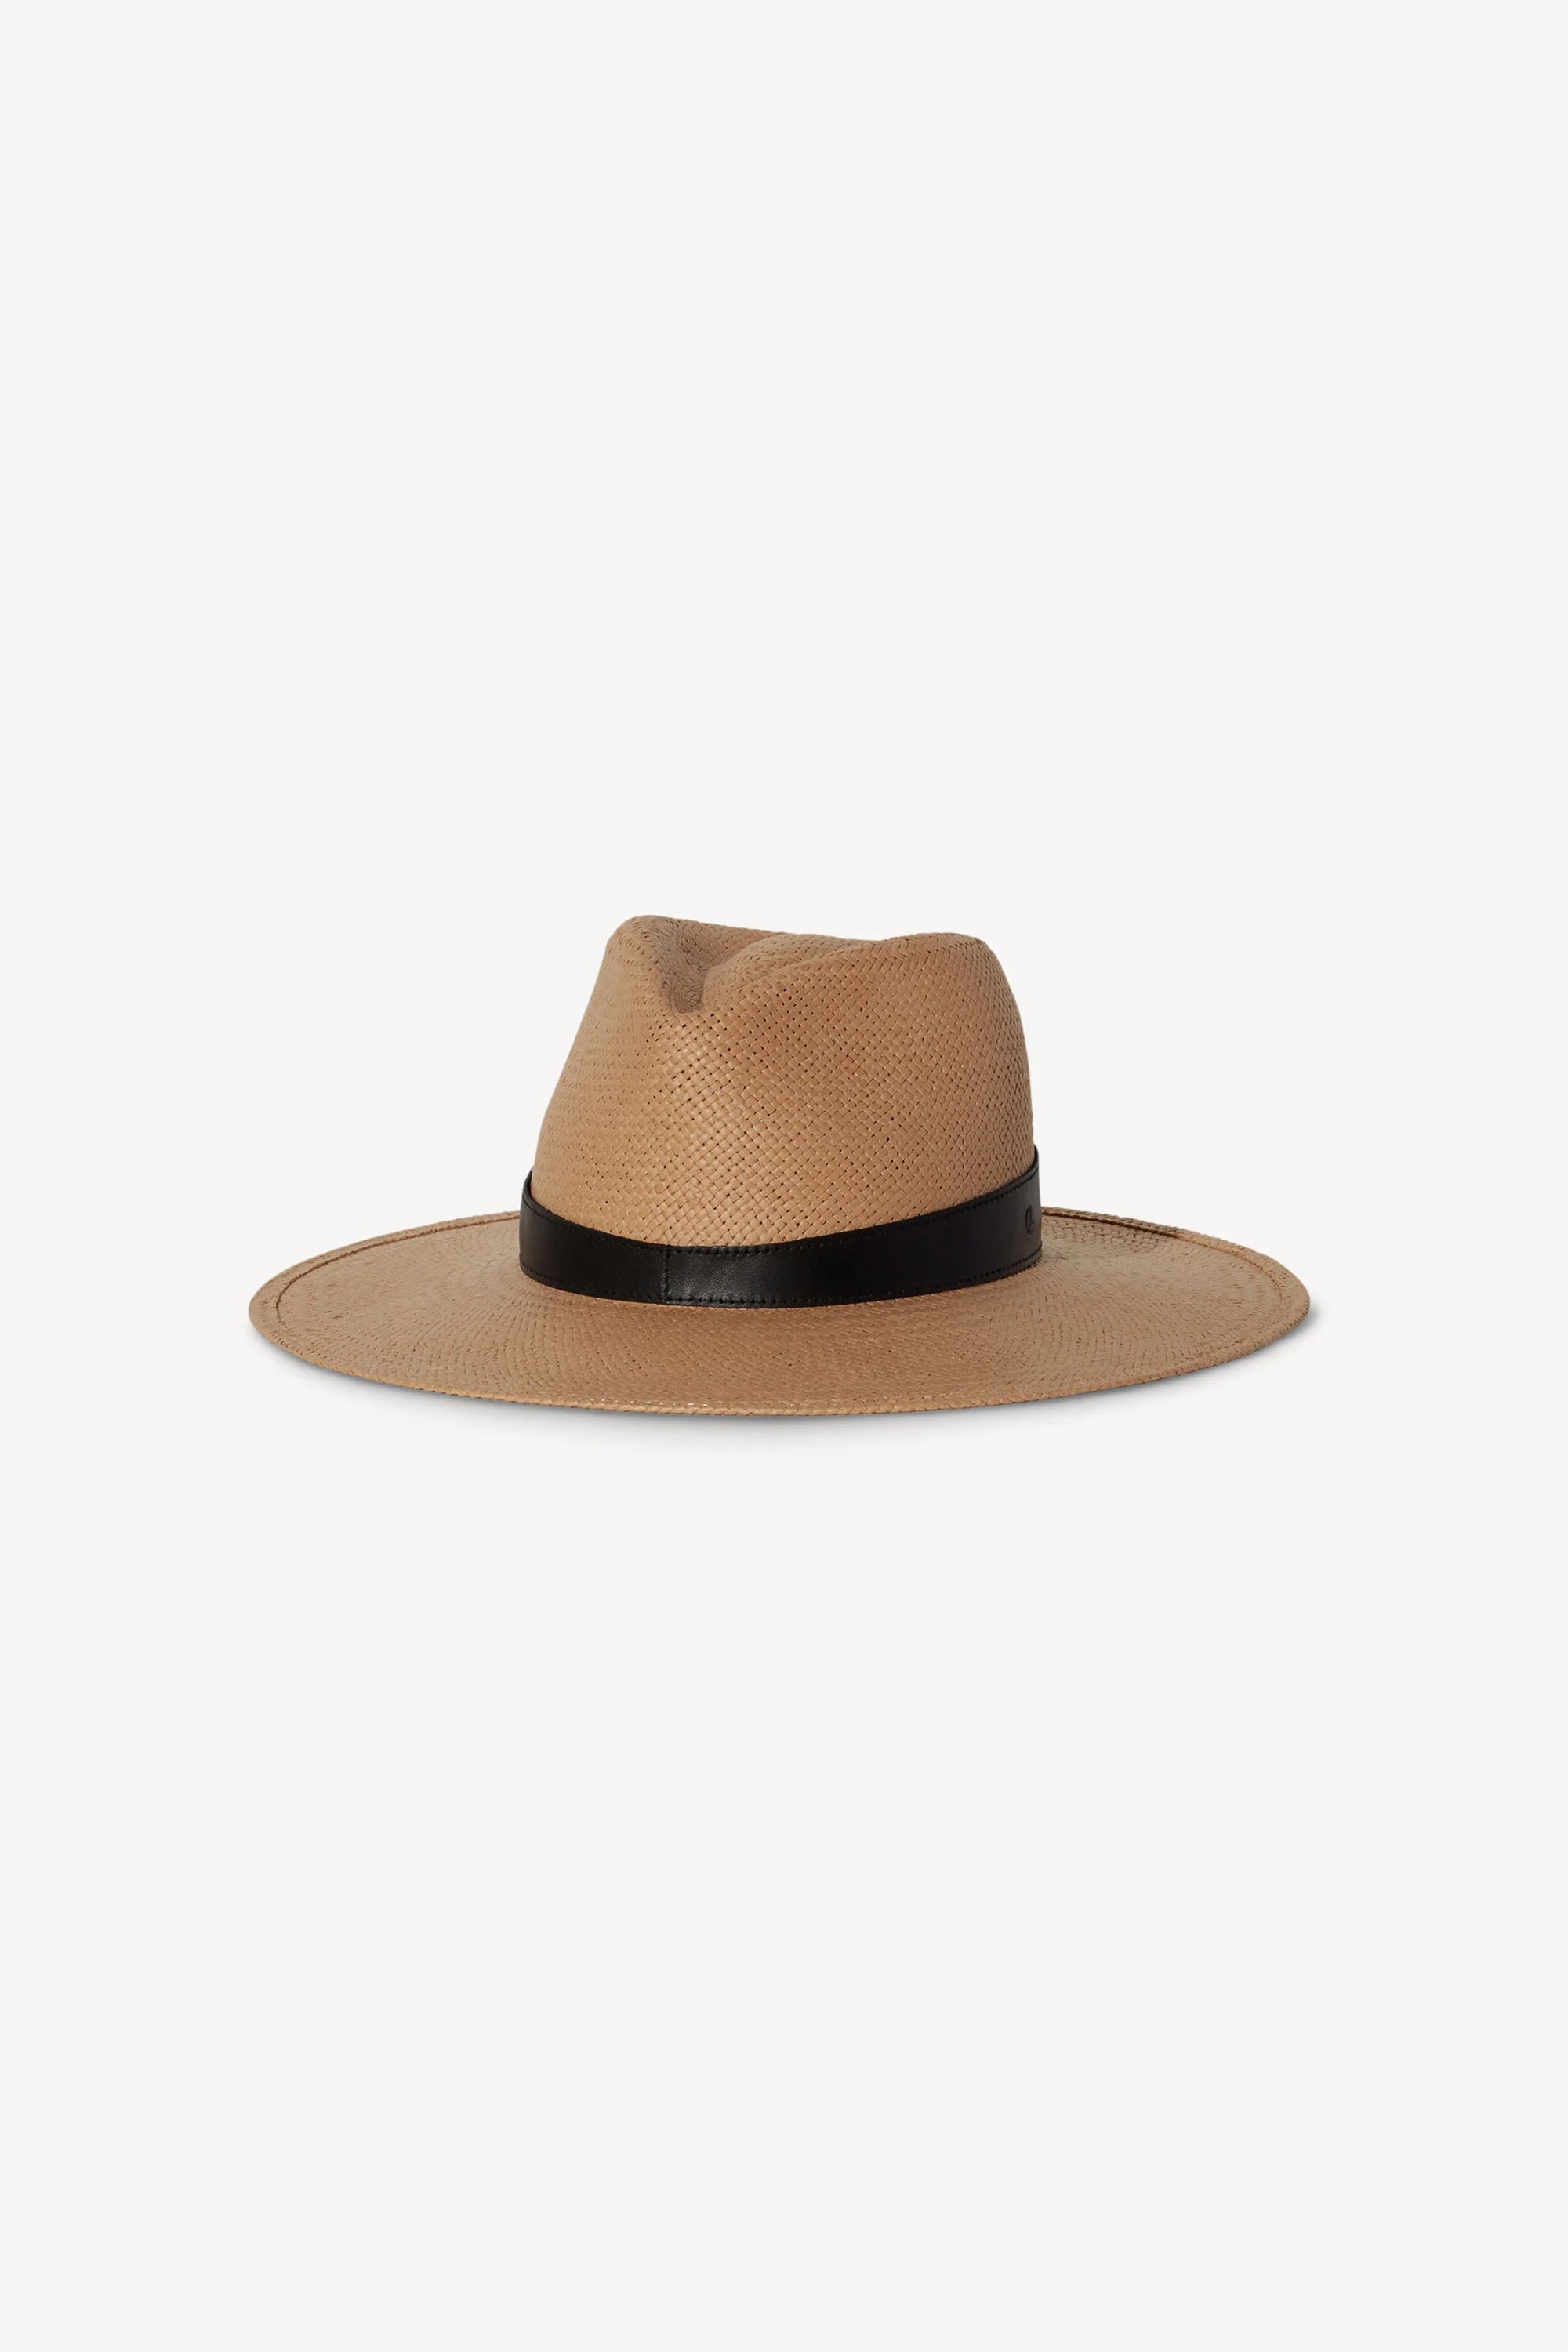 Savannah Hat | Janessa Leone